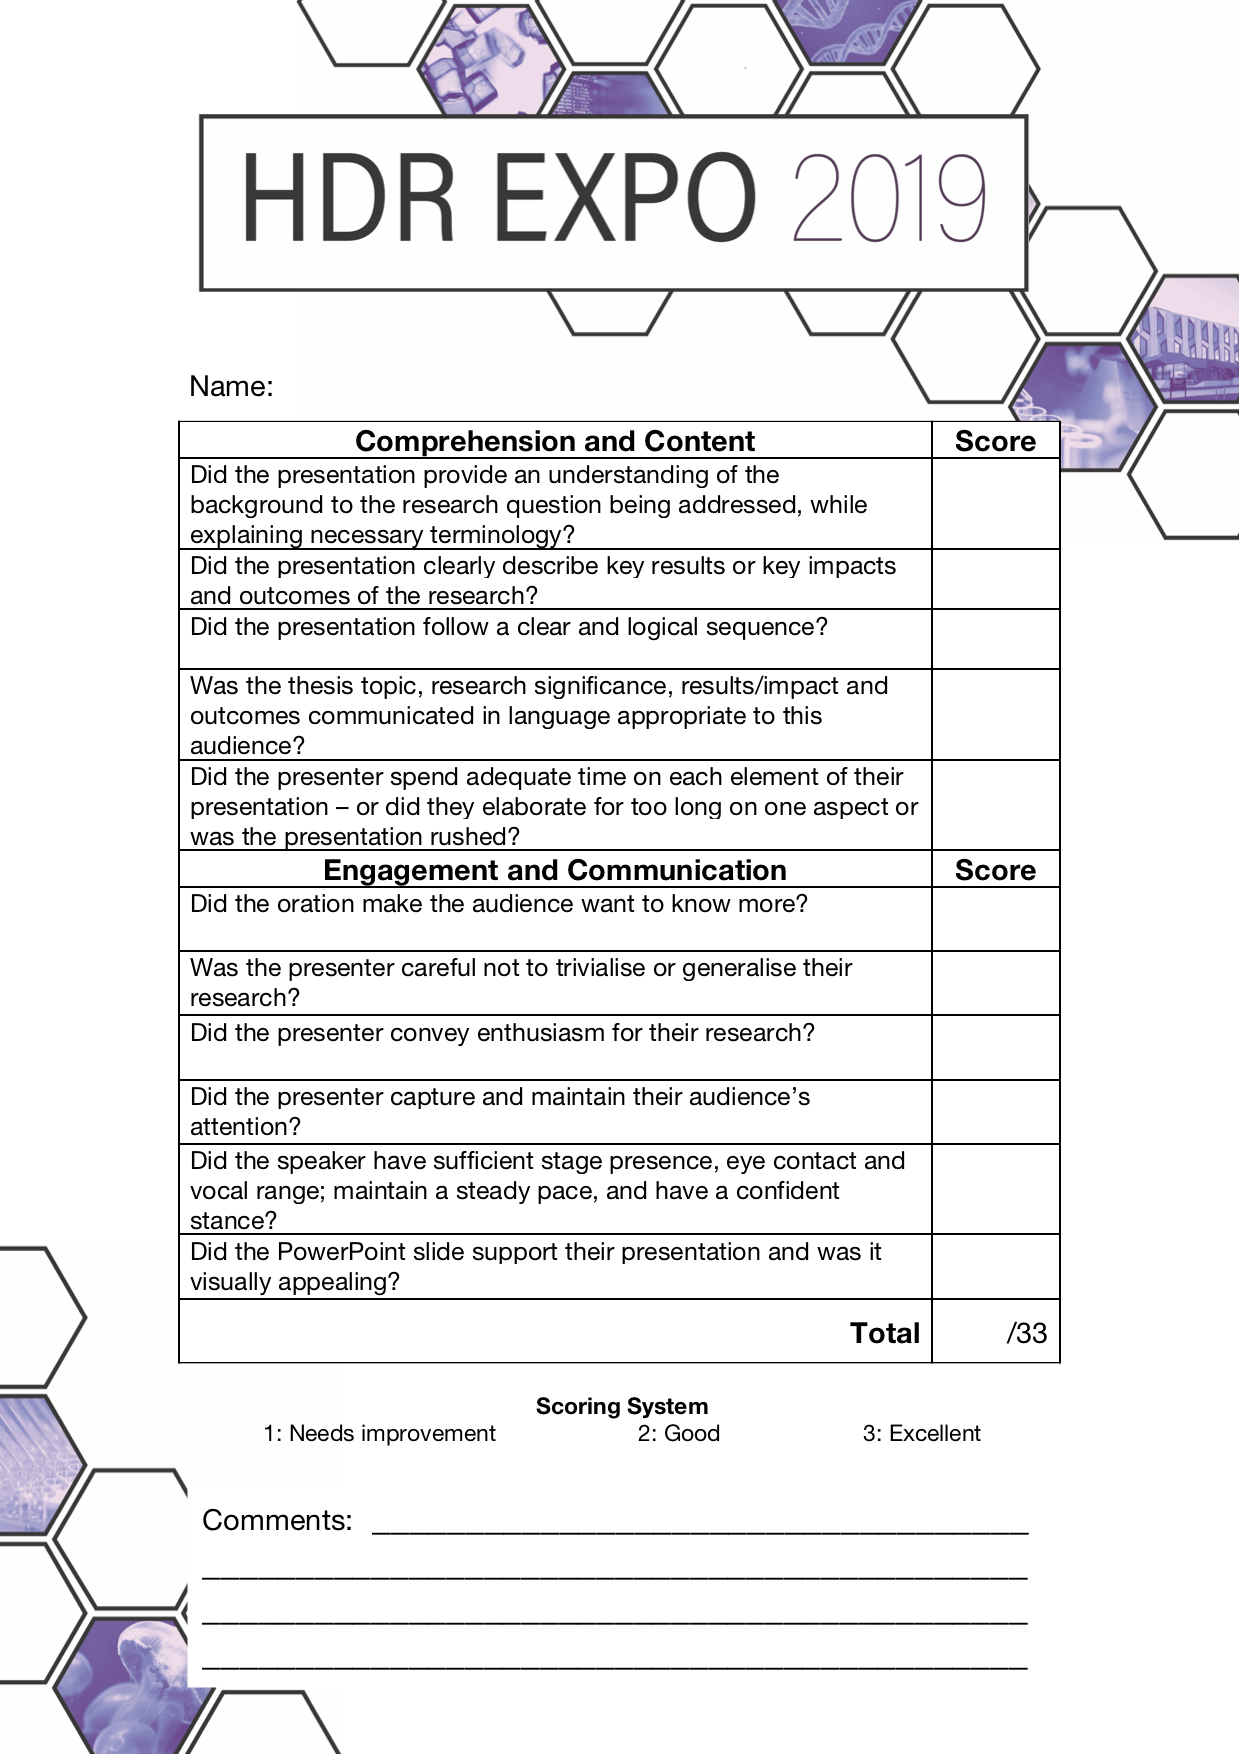 Example marking sheet